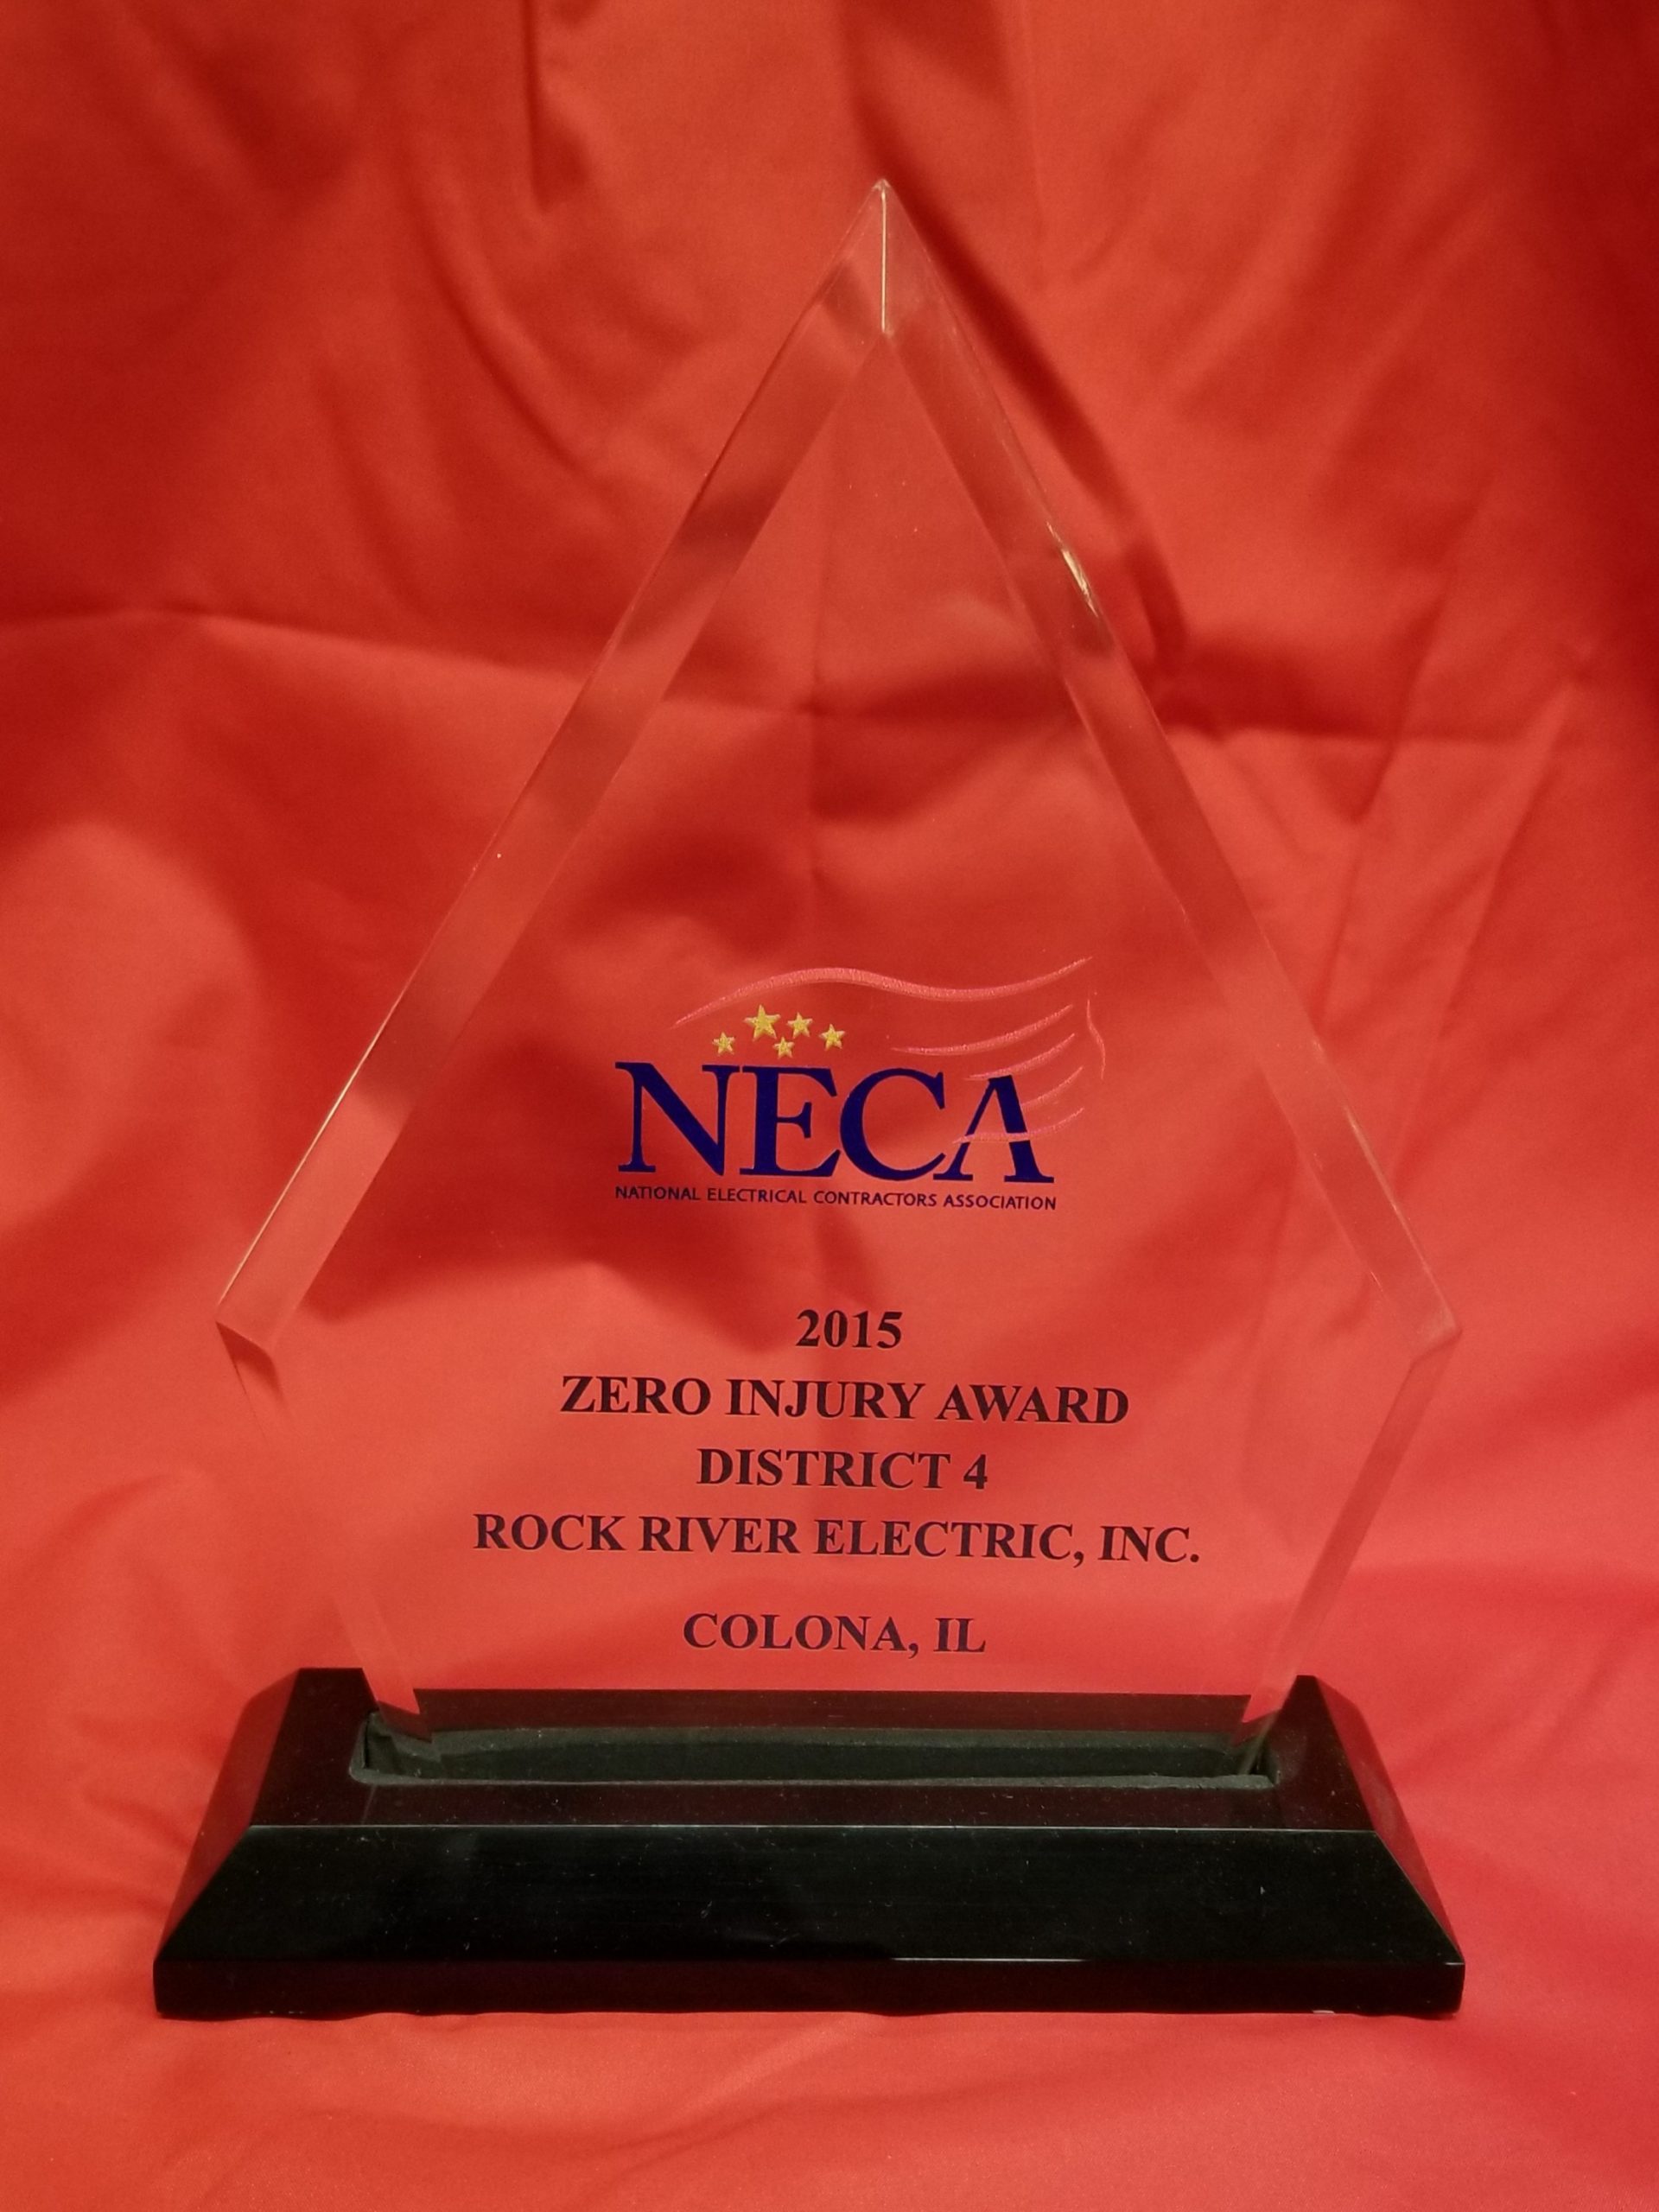 2015 NECA Safety Excellence Award & Zero Injury Award